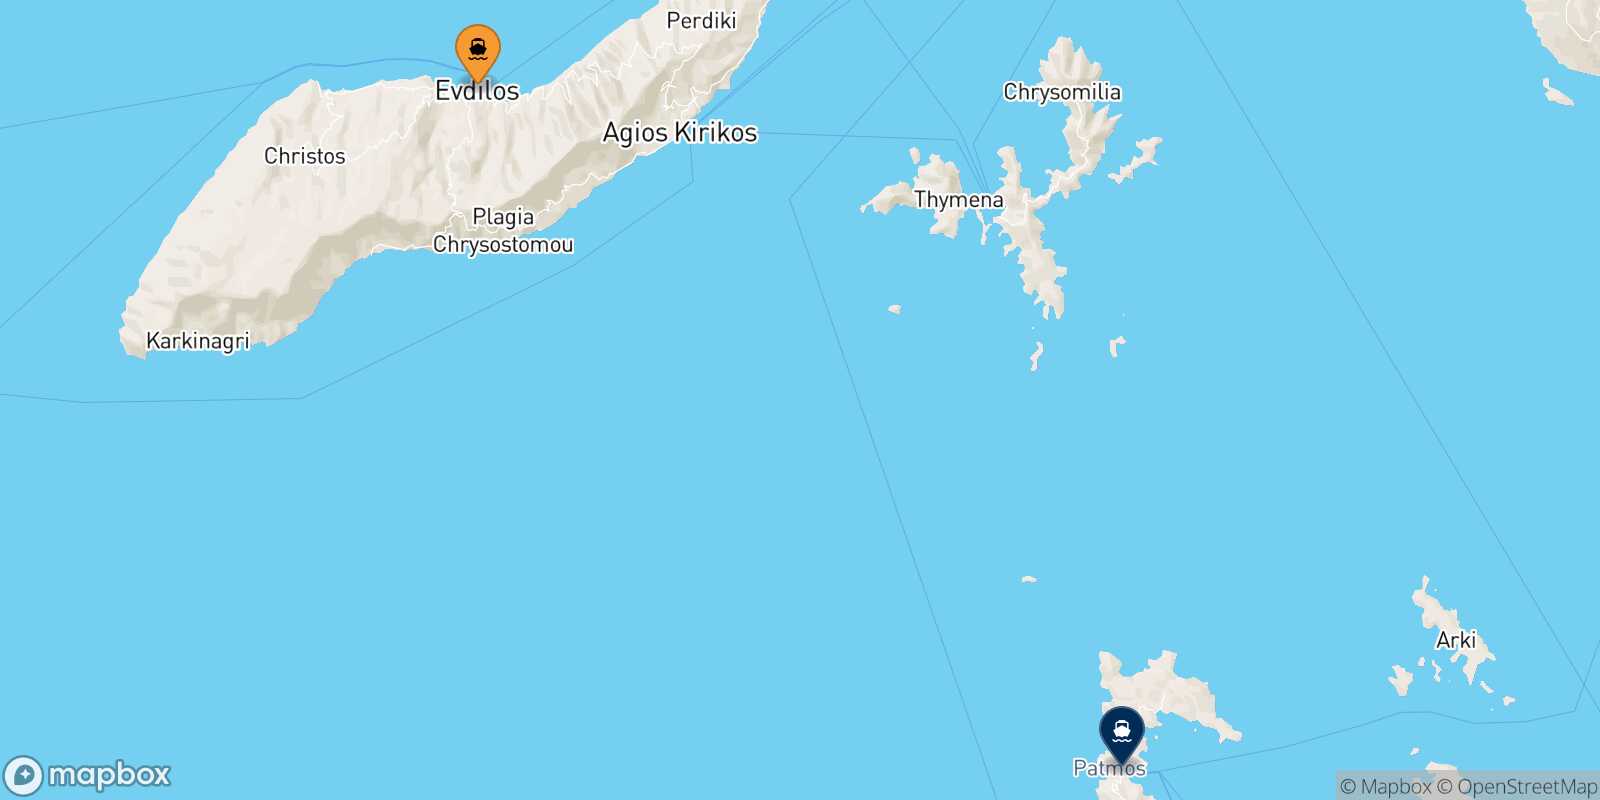 Evdilos (Ikaria) Patmos route map